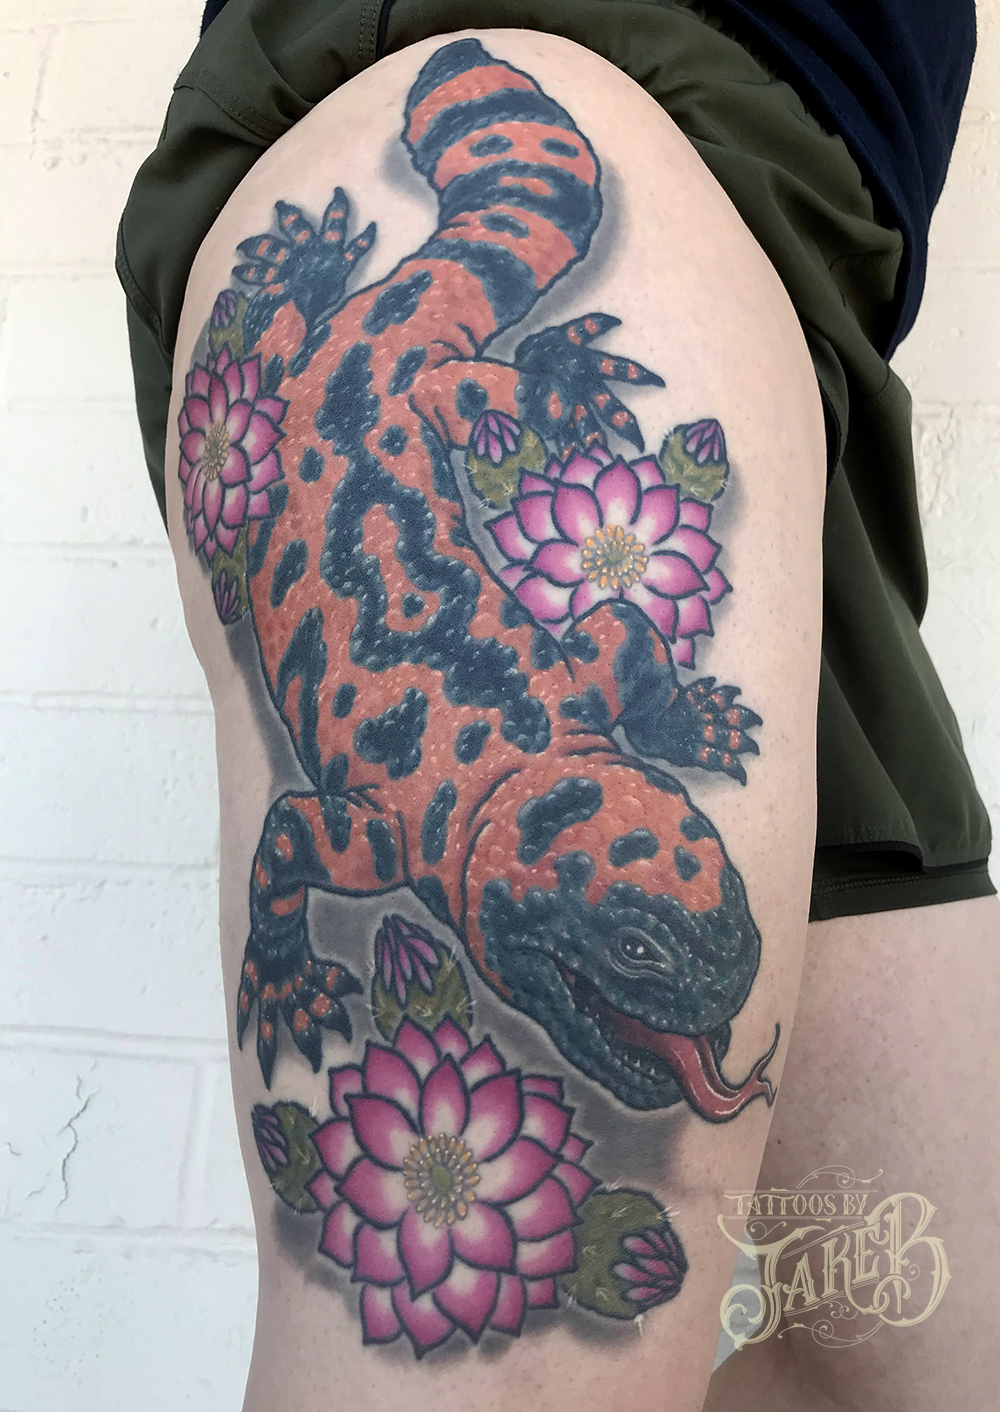 gila monster tattoo by Jake B